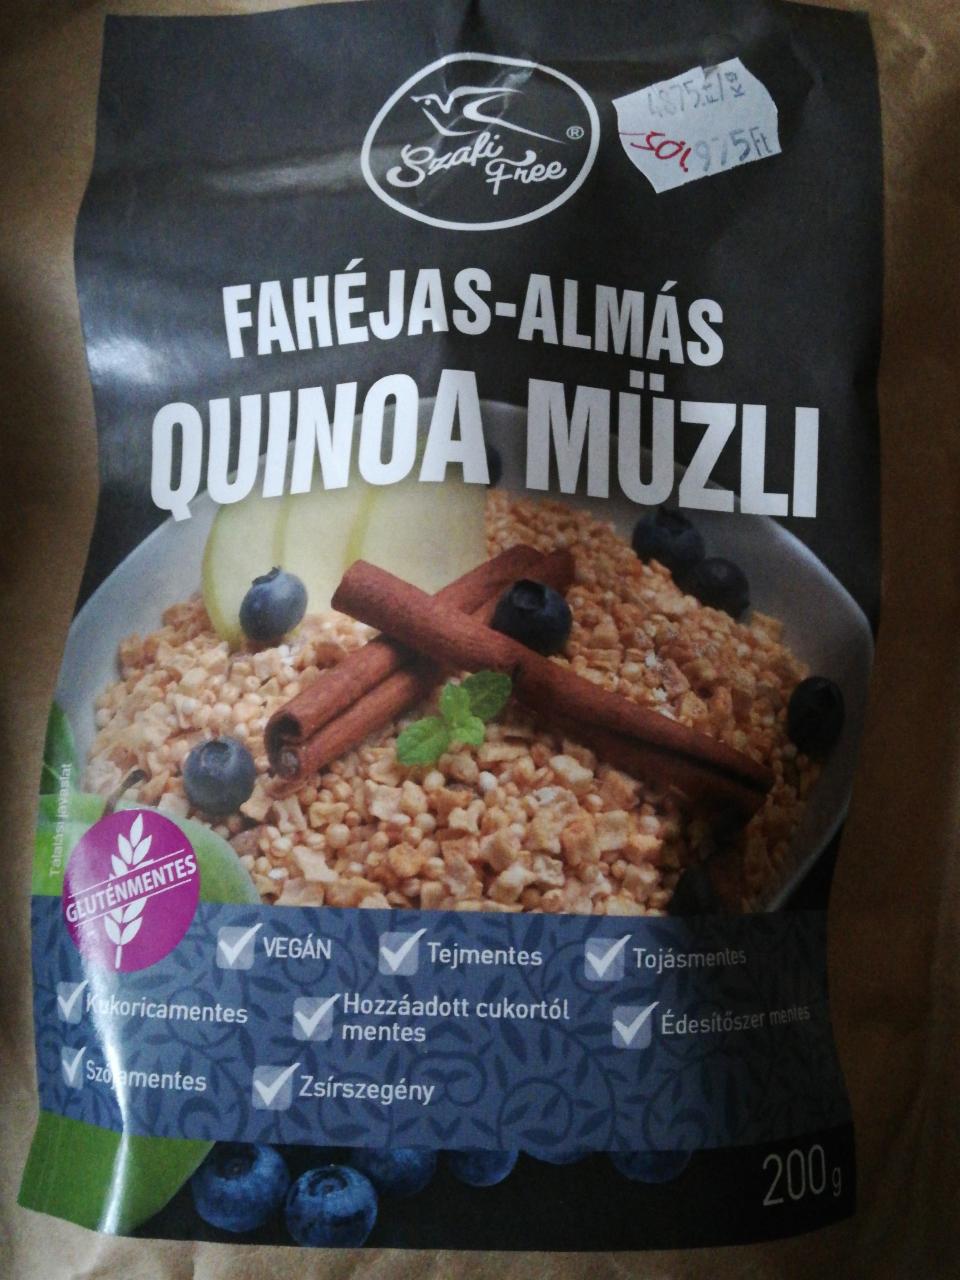 Fotografie - szafi free bezlepkove quinoa musli